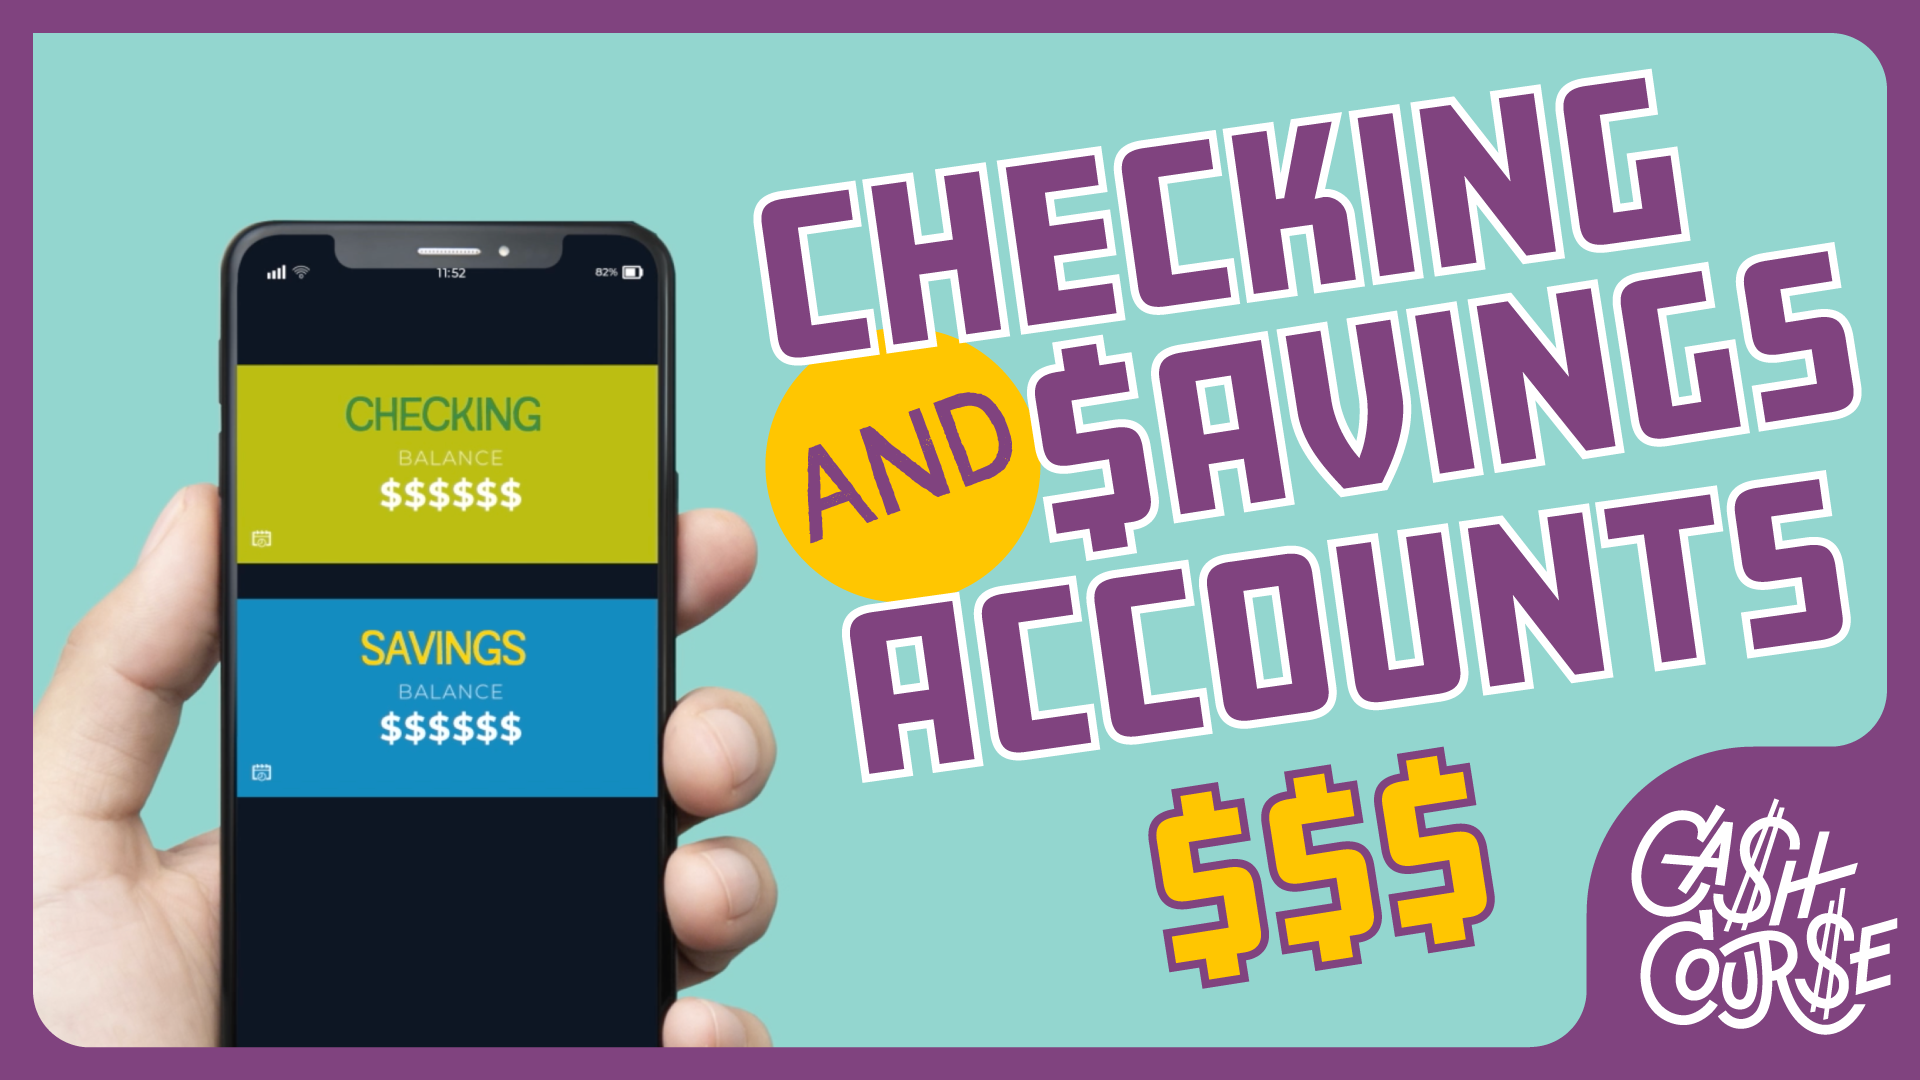 Checking and Savings Accounts